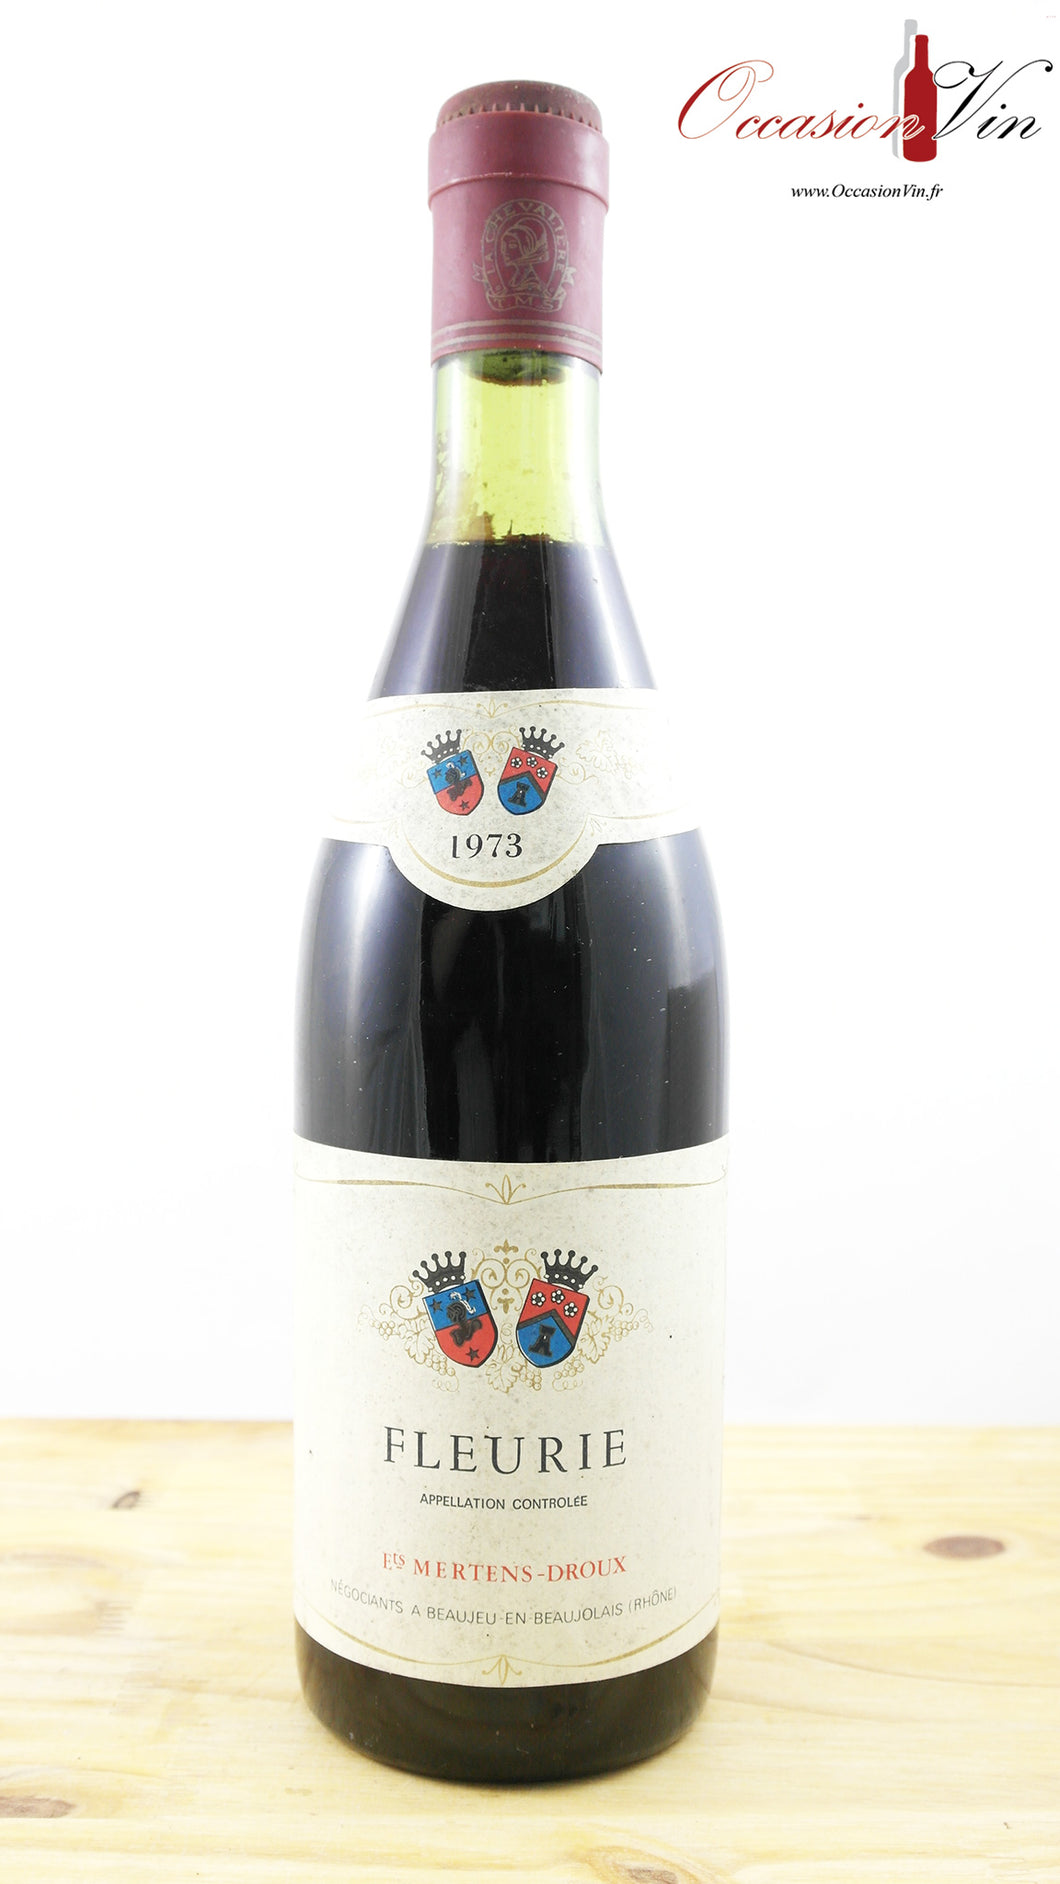 Fleurie Mertens-Droux Vin 1973